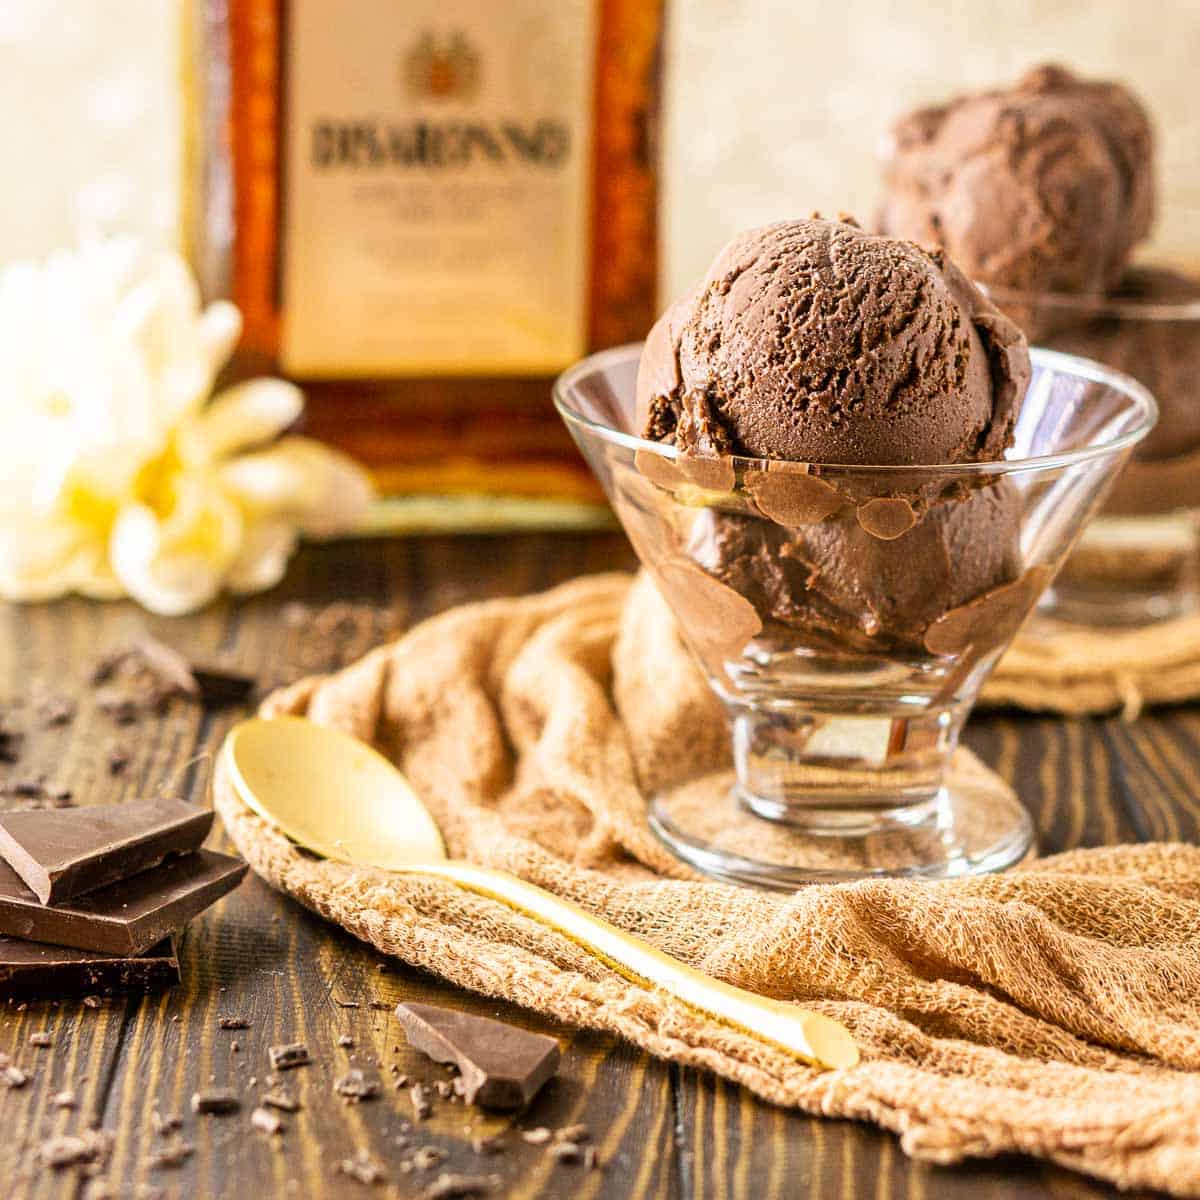 Homemade Chocolate Ice Cream (5 Mins - 5 Ingredients) - Veena Azmanov